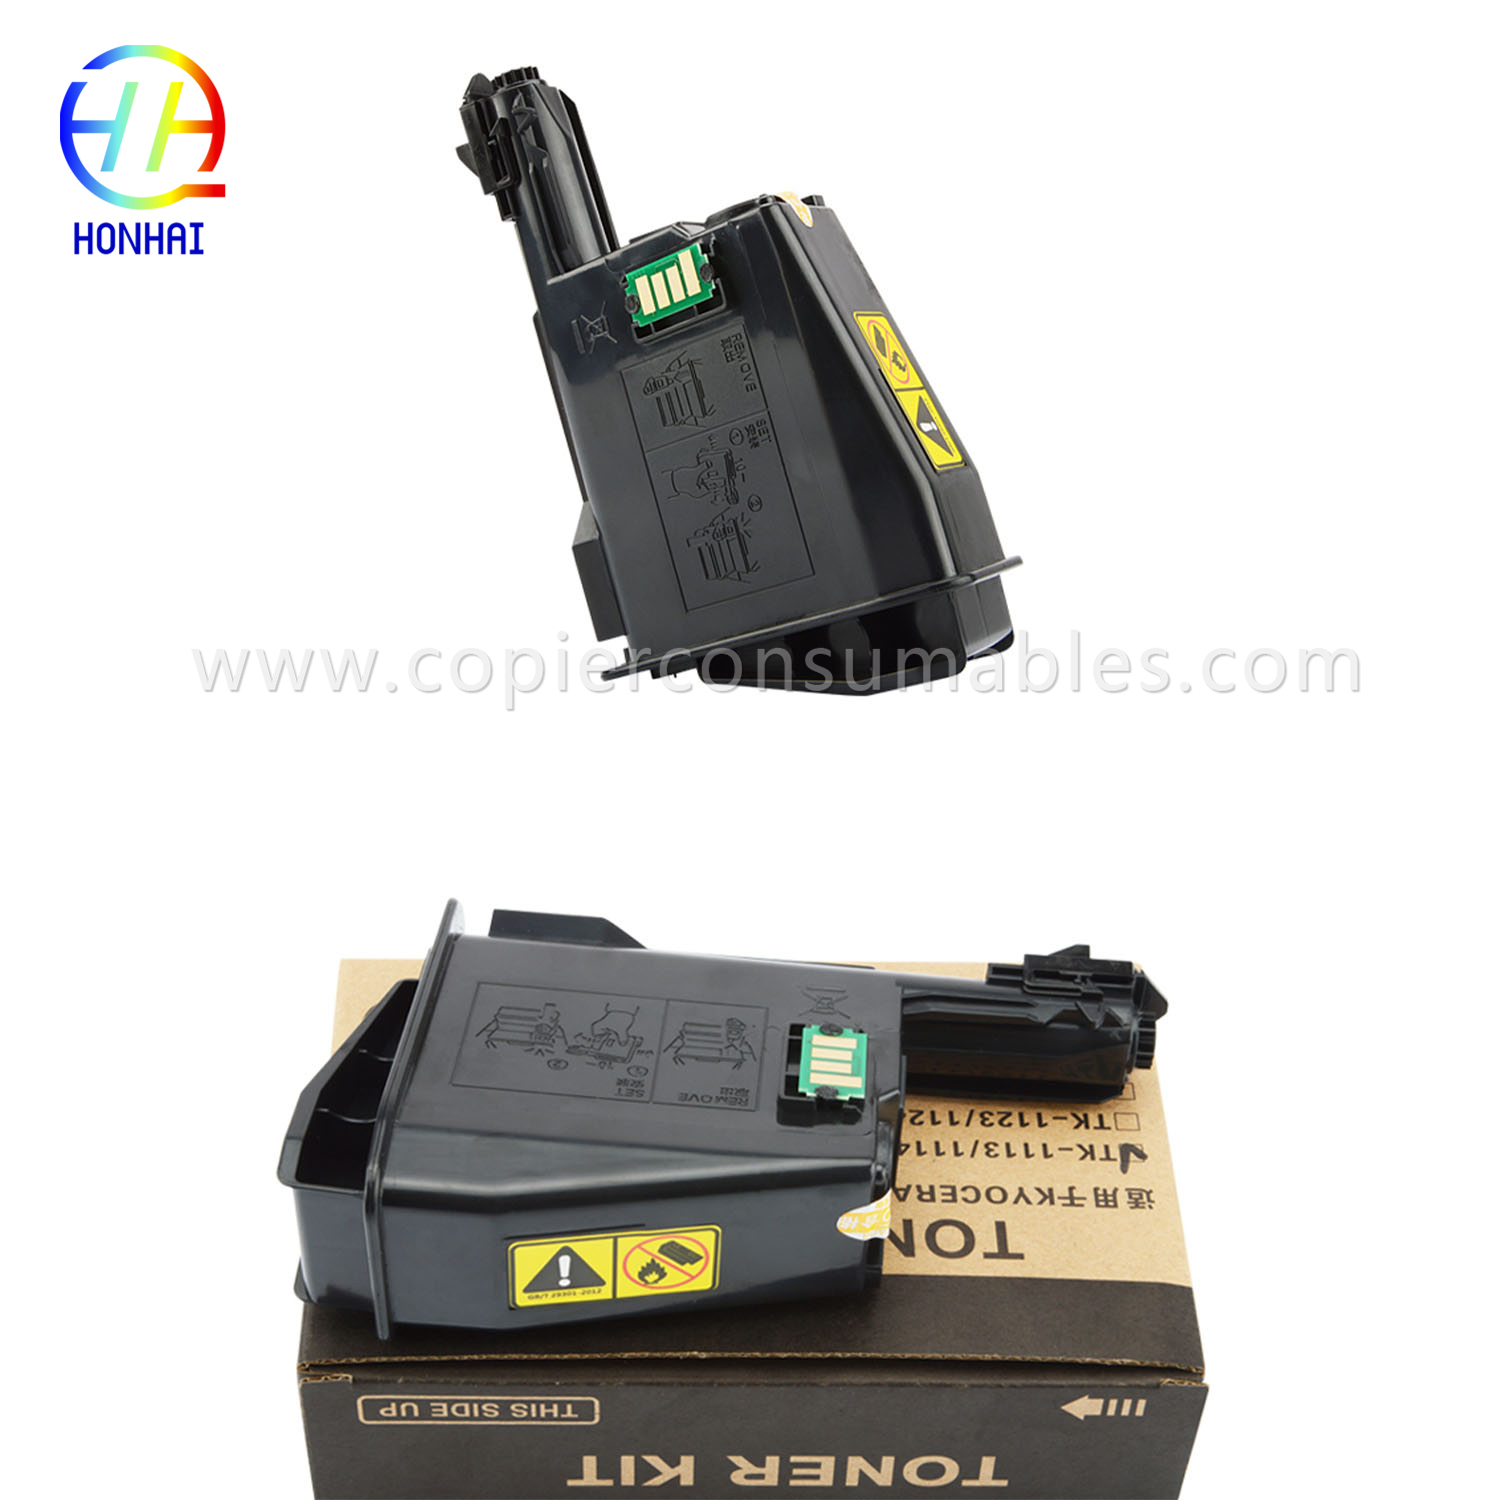 Toner Cartridge for Kyocera FS-1040 1020MFP 1120MFP ECOSYS M1520h